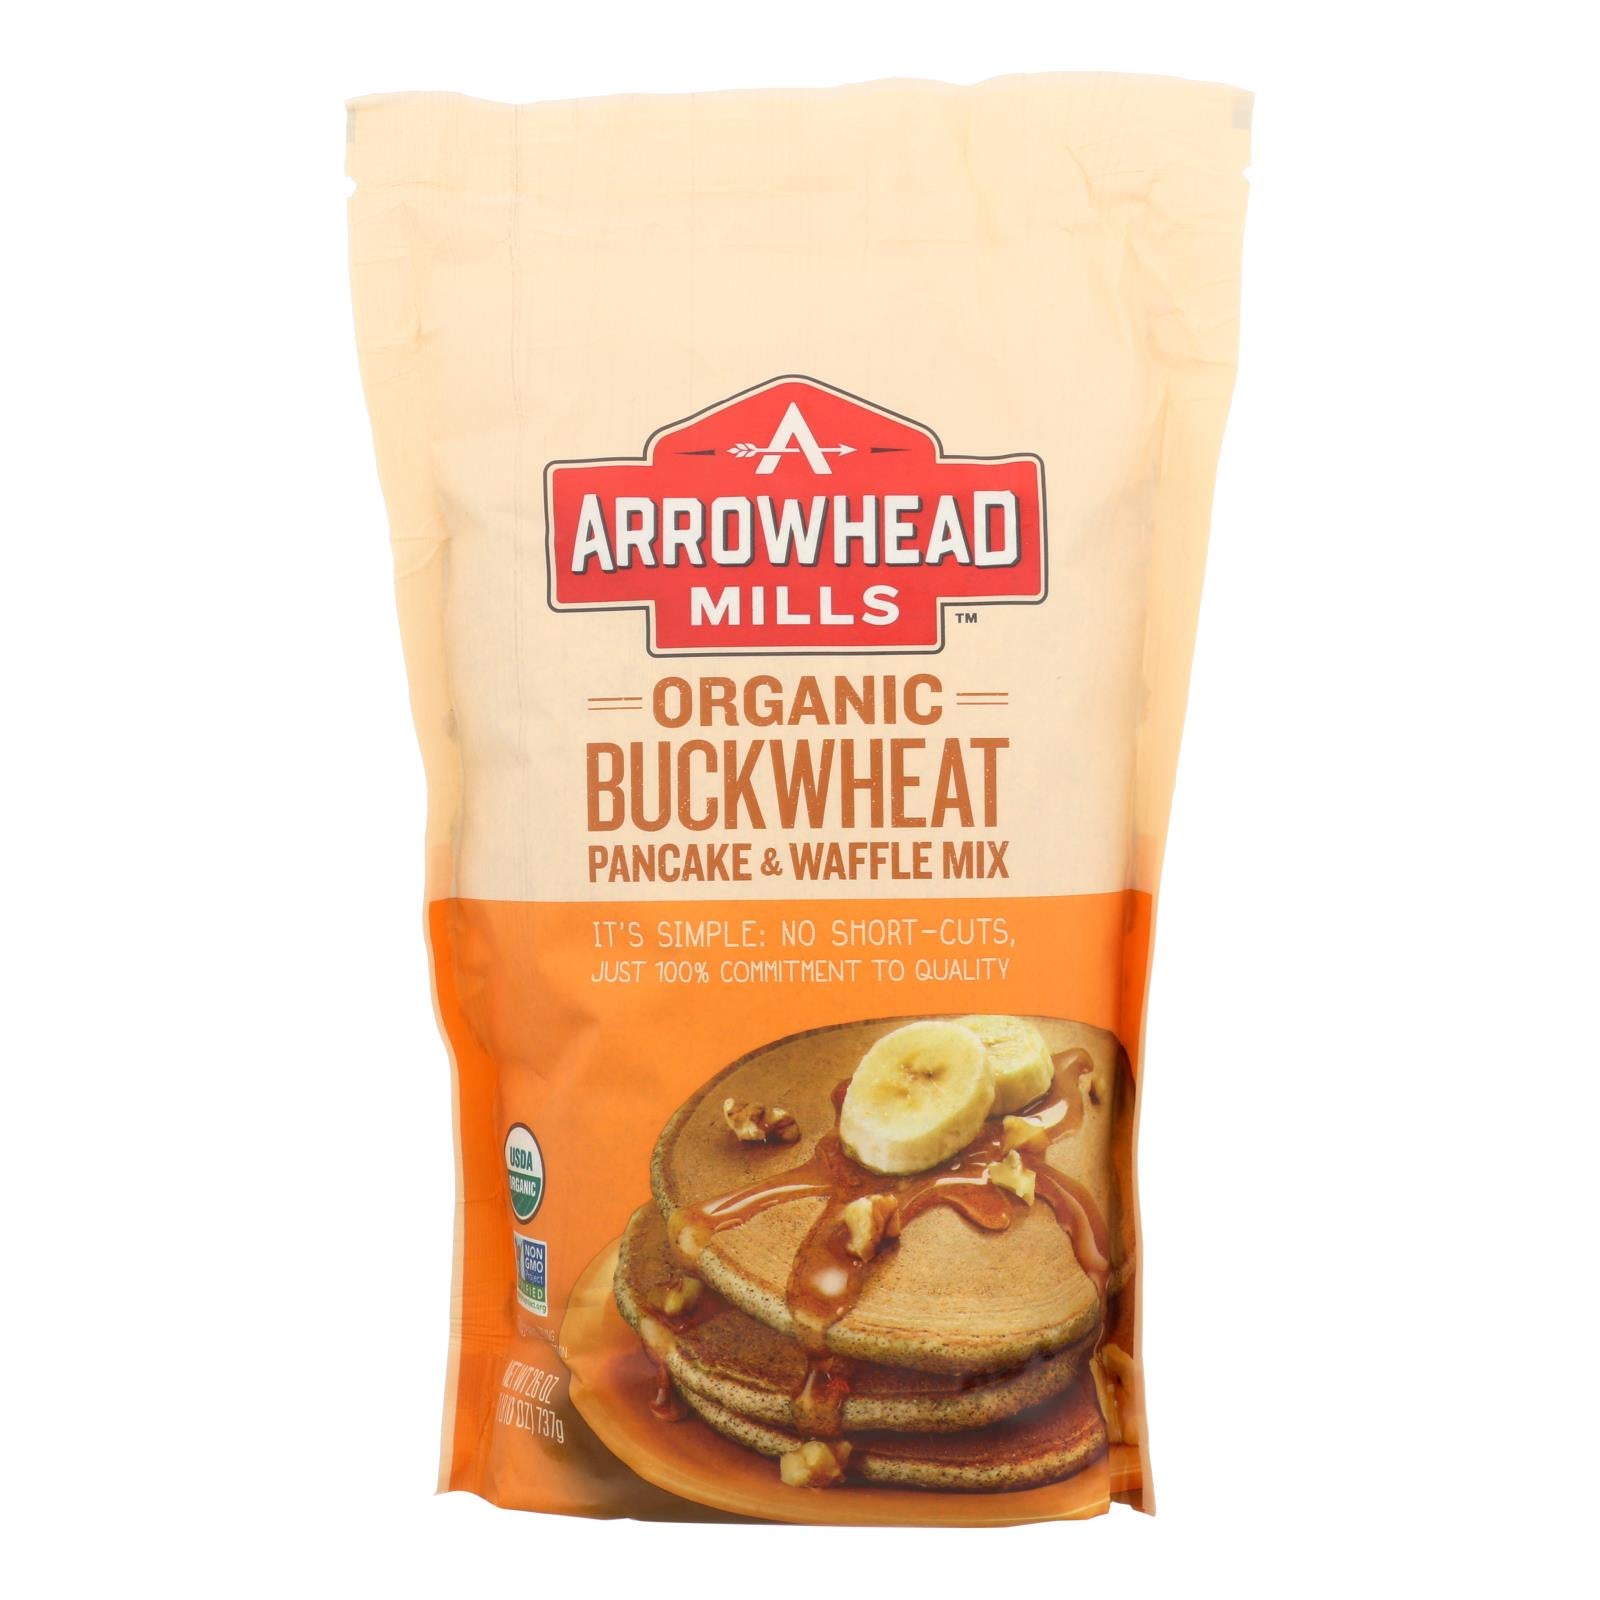 Arrowhead Mills, Arrowhead Mills - Organic Buckwheat Pancake and Waffle Mix - Case of 6 - 26 oz. (Pack of 6)